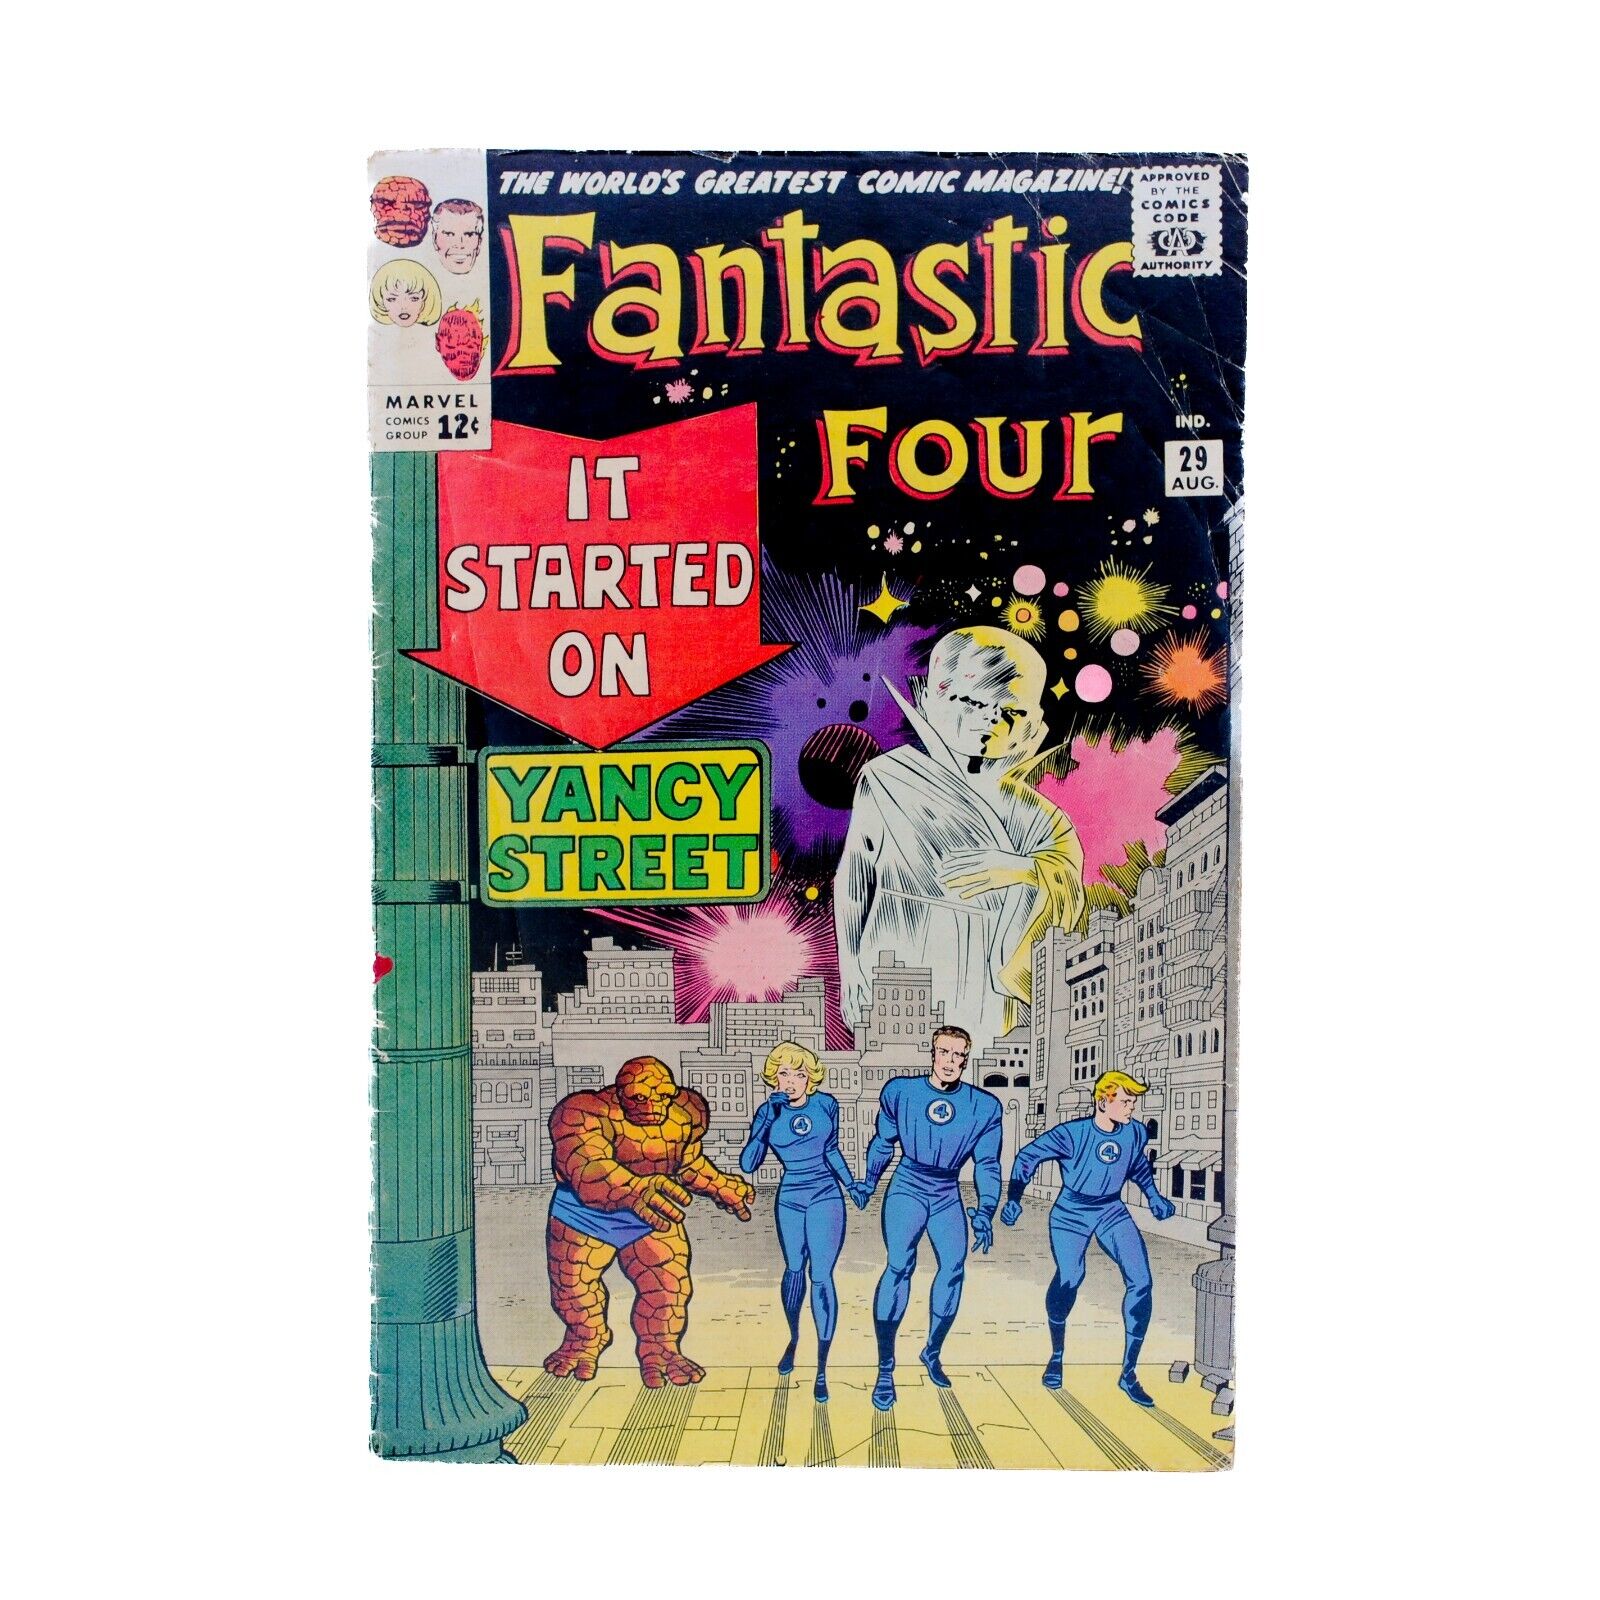 Fantastic Four Volume 1, Issue #29 (August 1964)